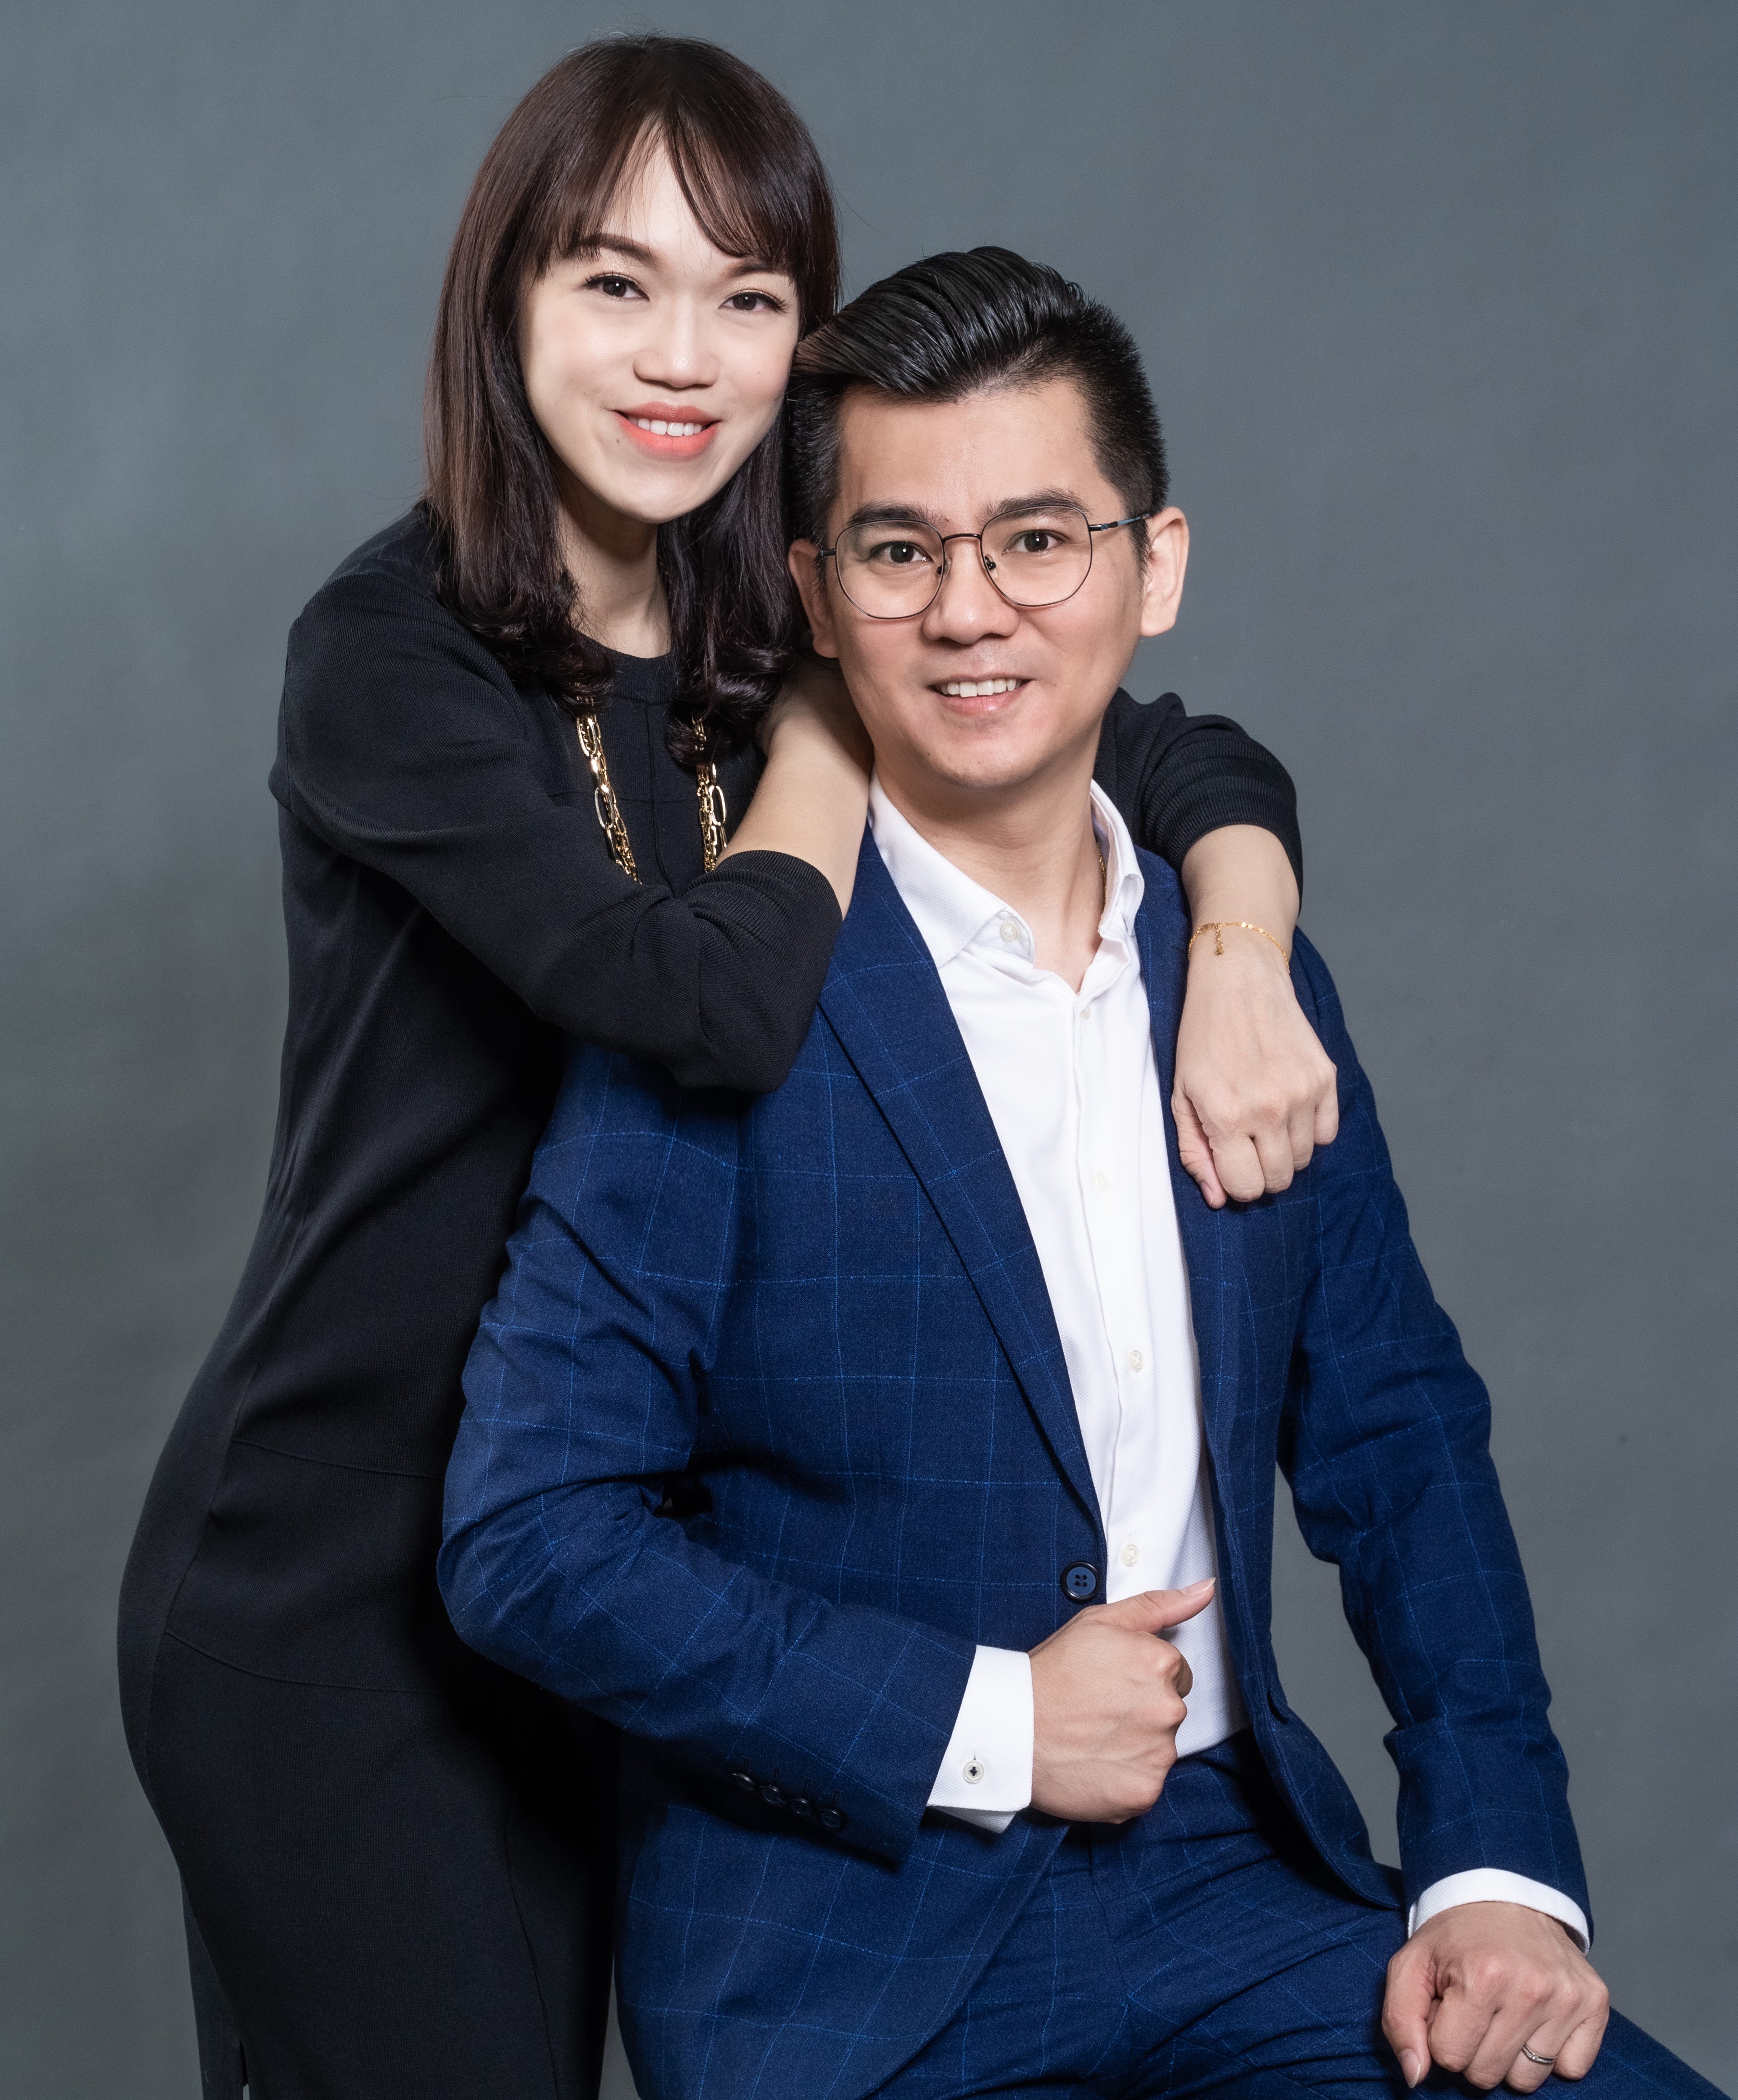 Aeris Wong and Victor Ong Headshot Ms